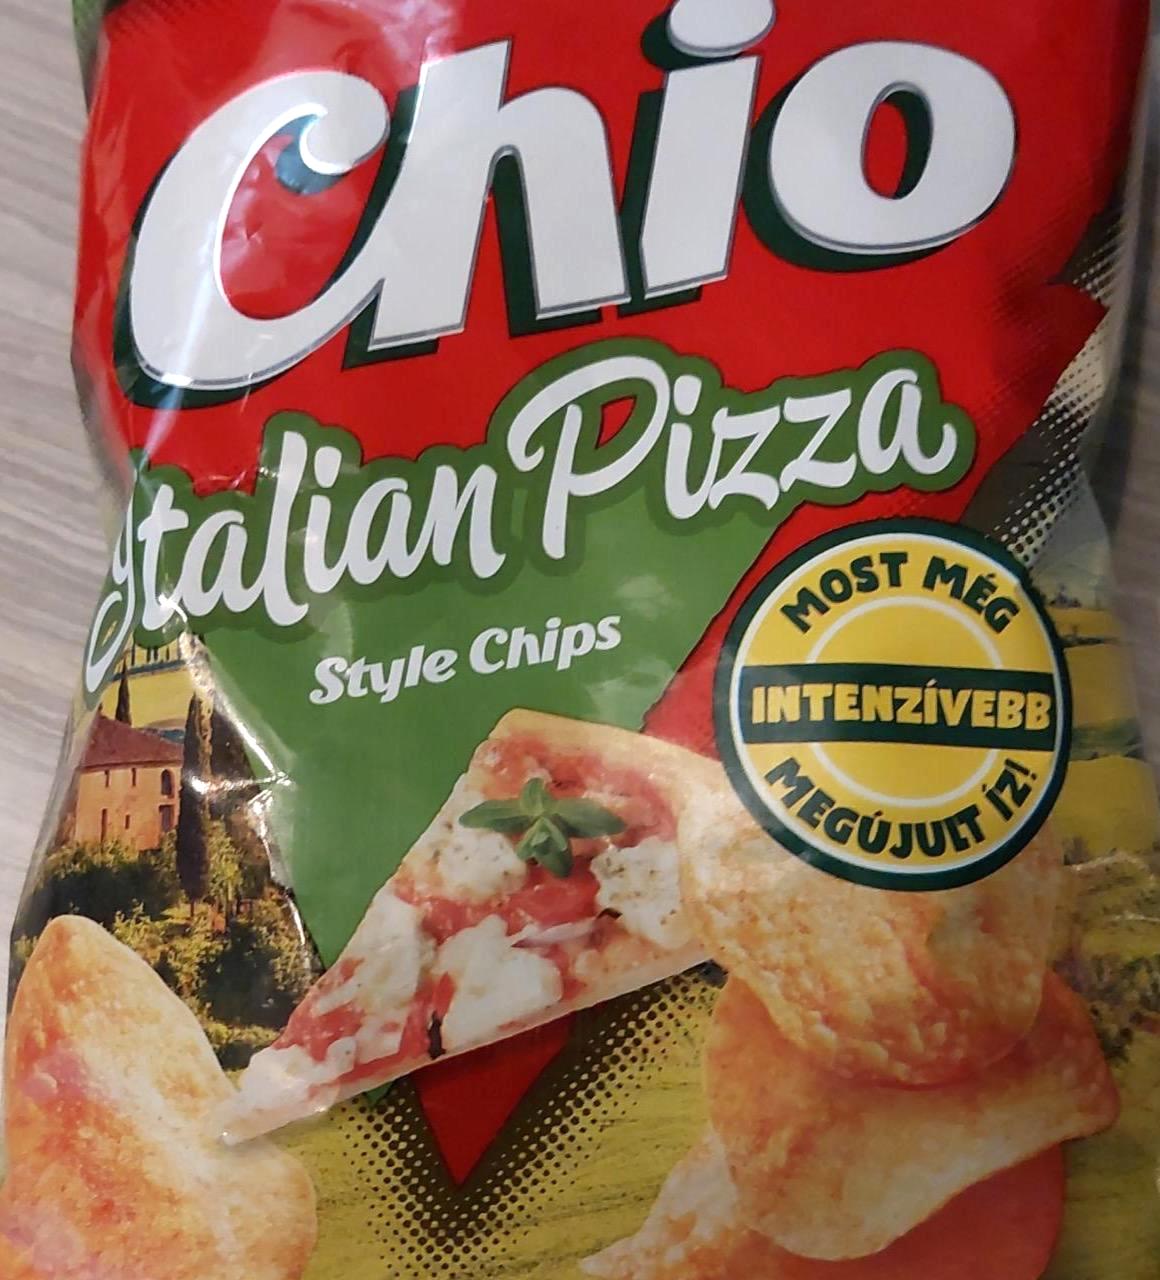 Képek - Chio italian pizza style chips